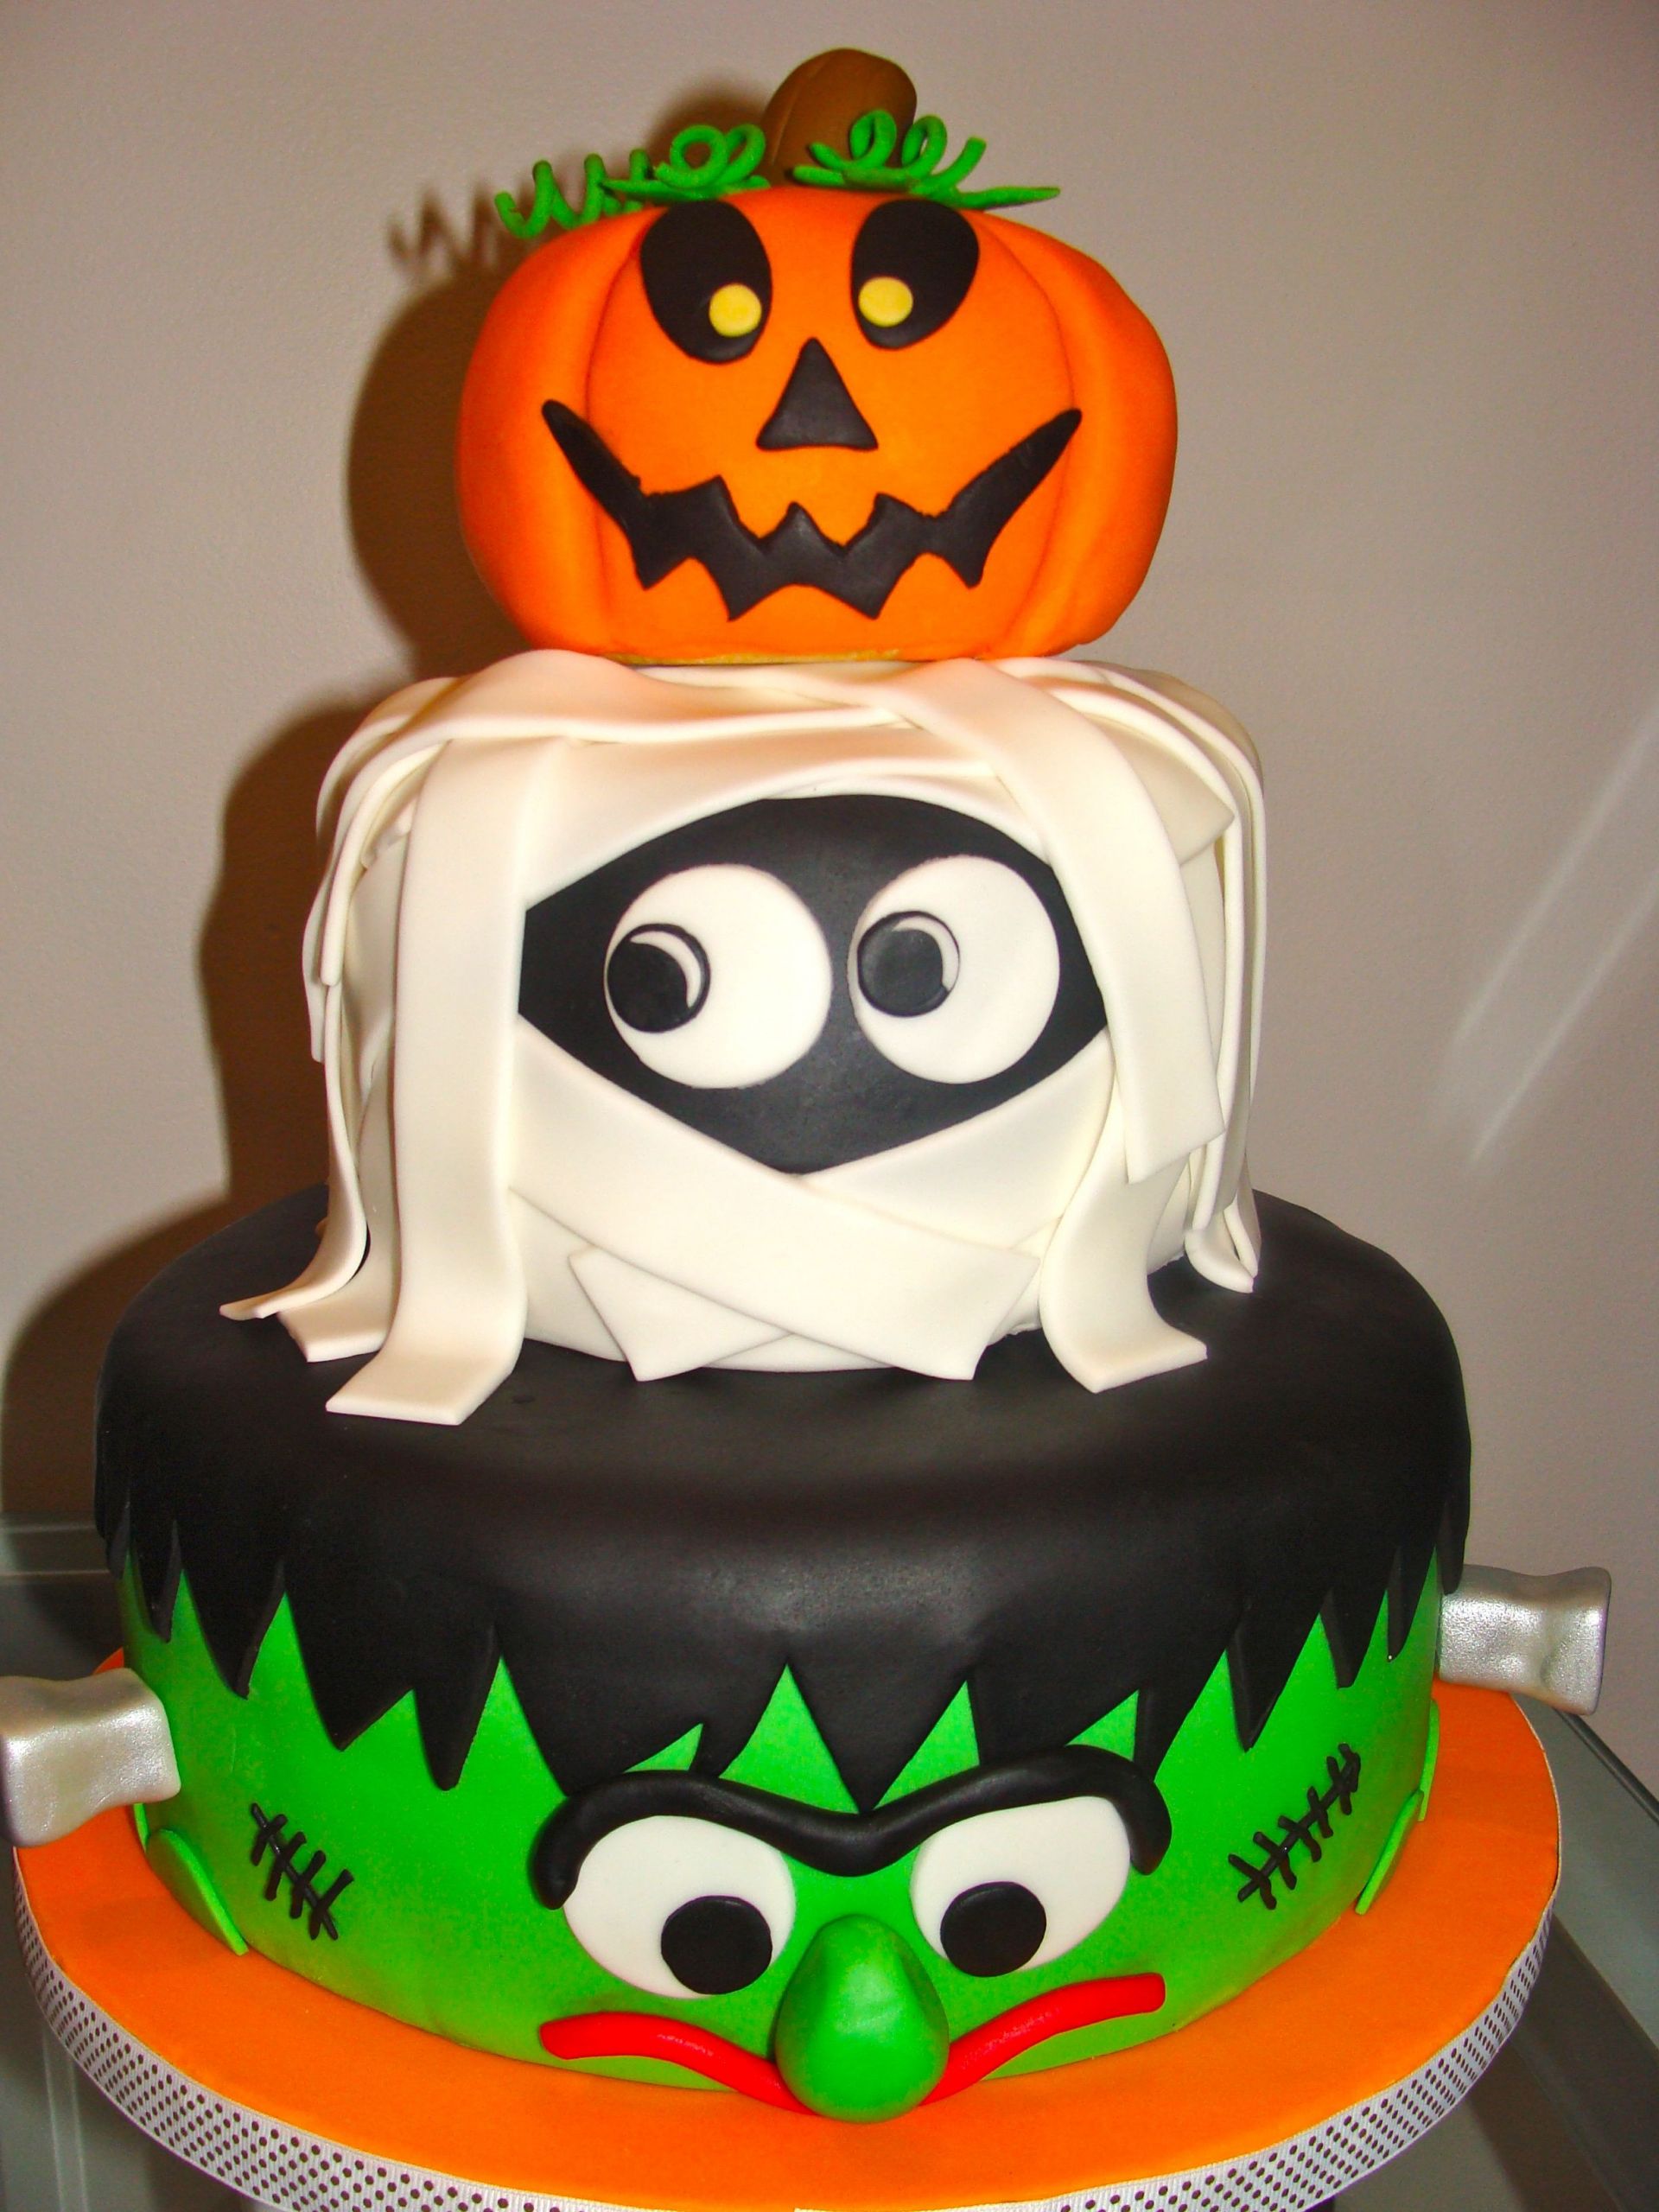 Halloween Party Cake Ideas
 21 Amazing Halloween Cake Ideas Halloween cakes